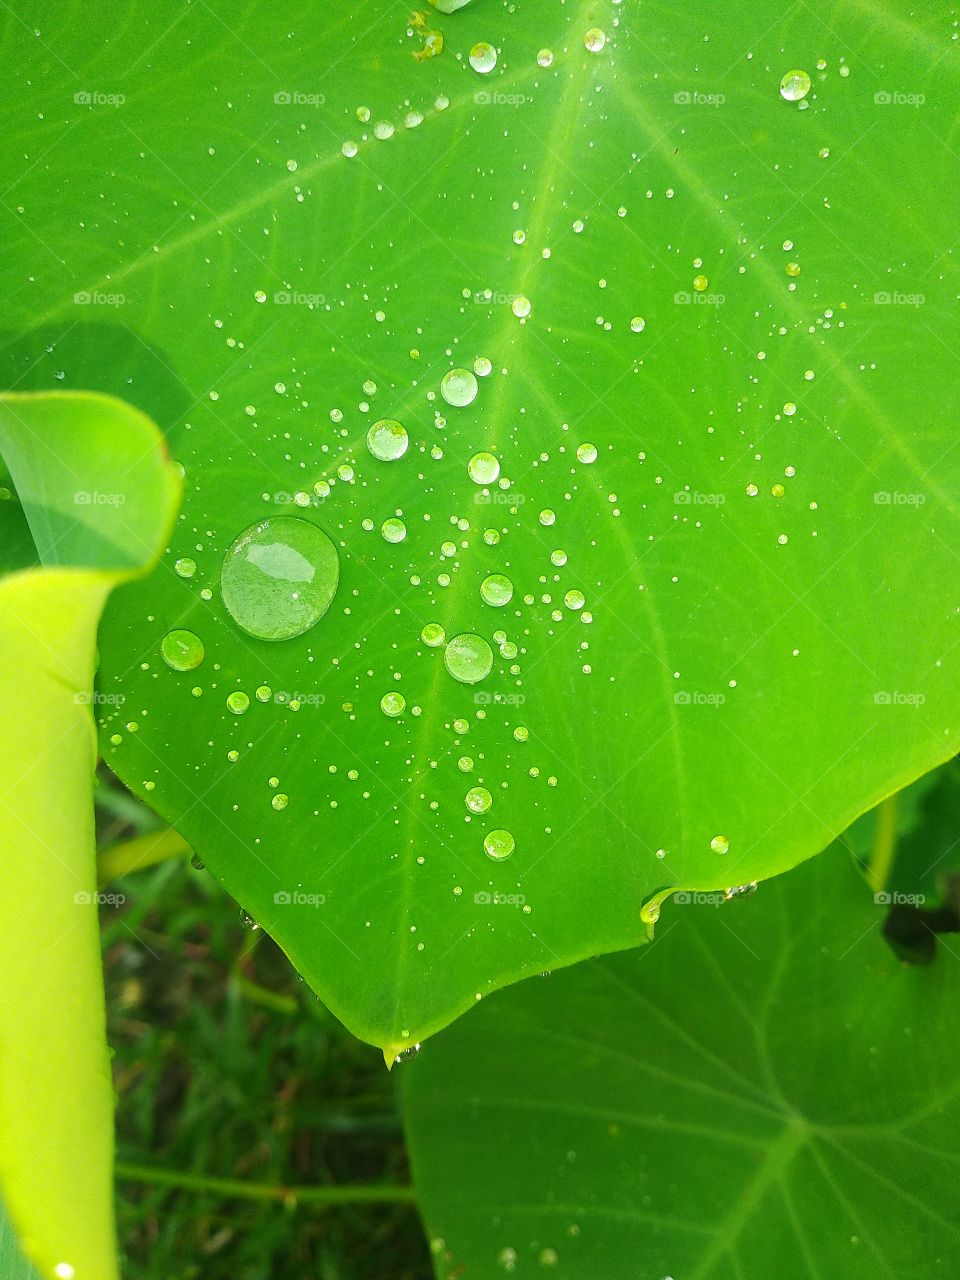 beautiful rain drop on the leaf in nature.